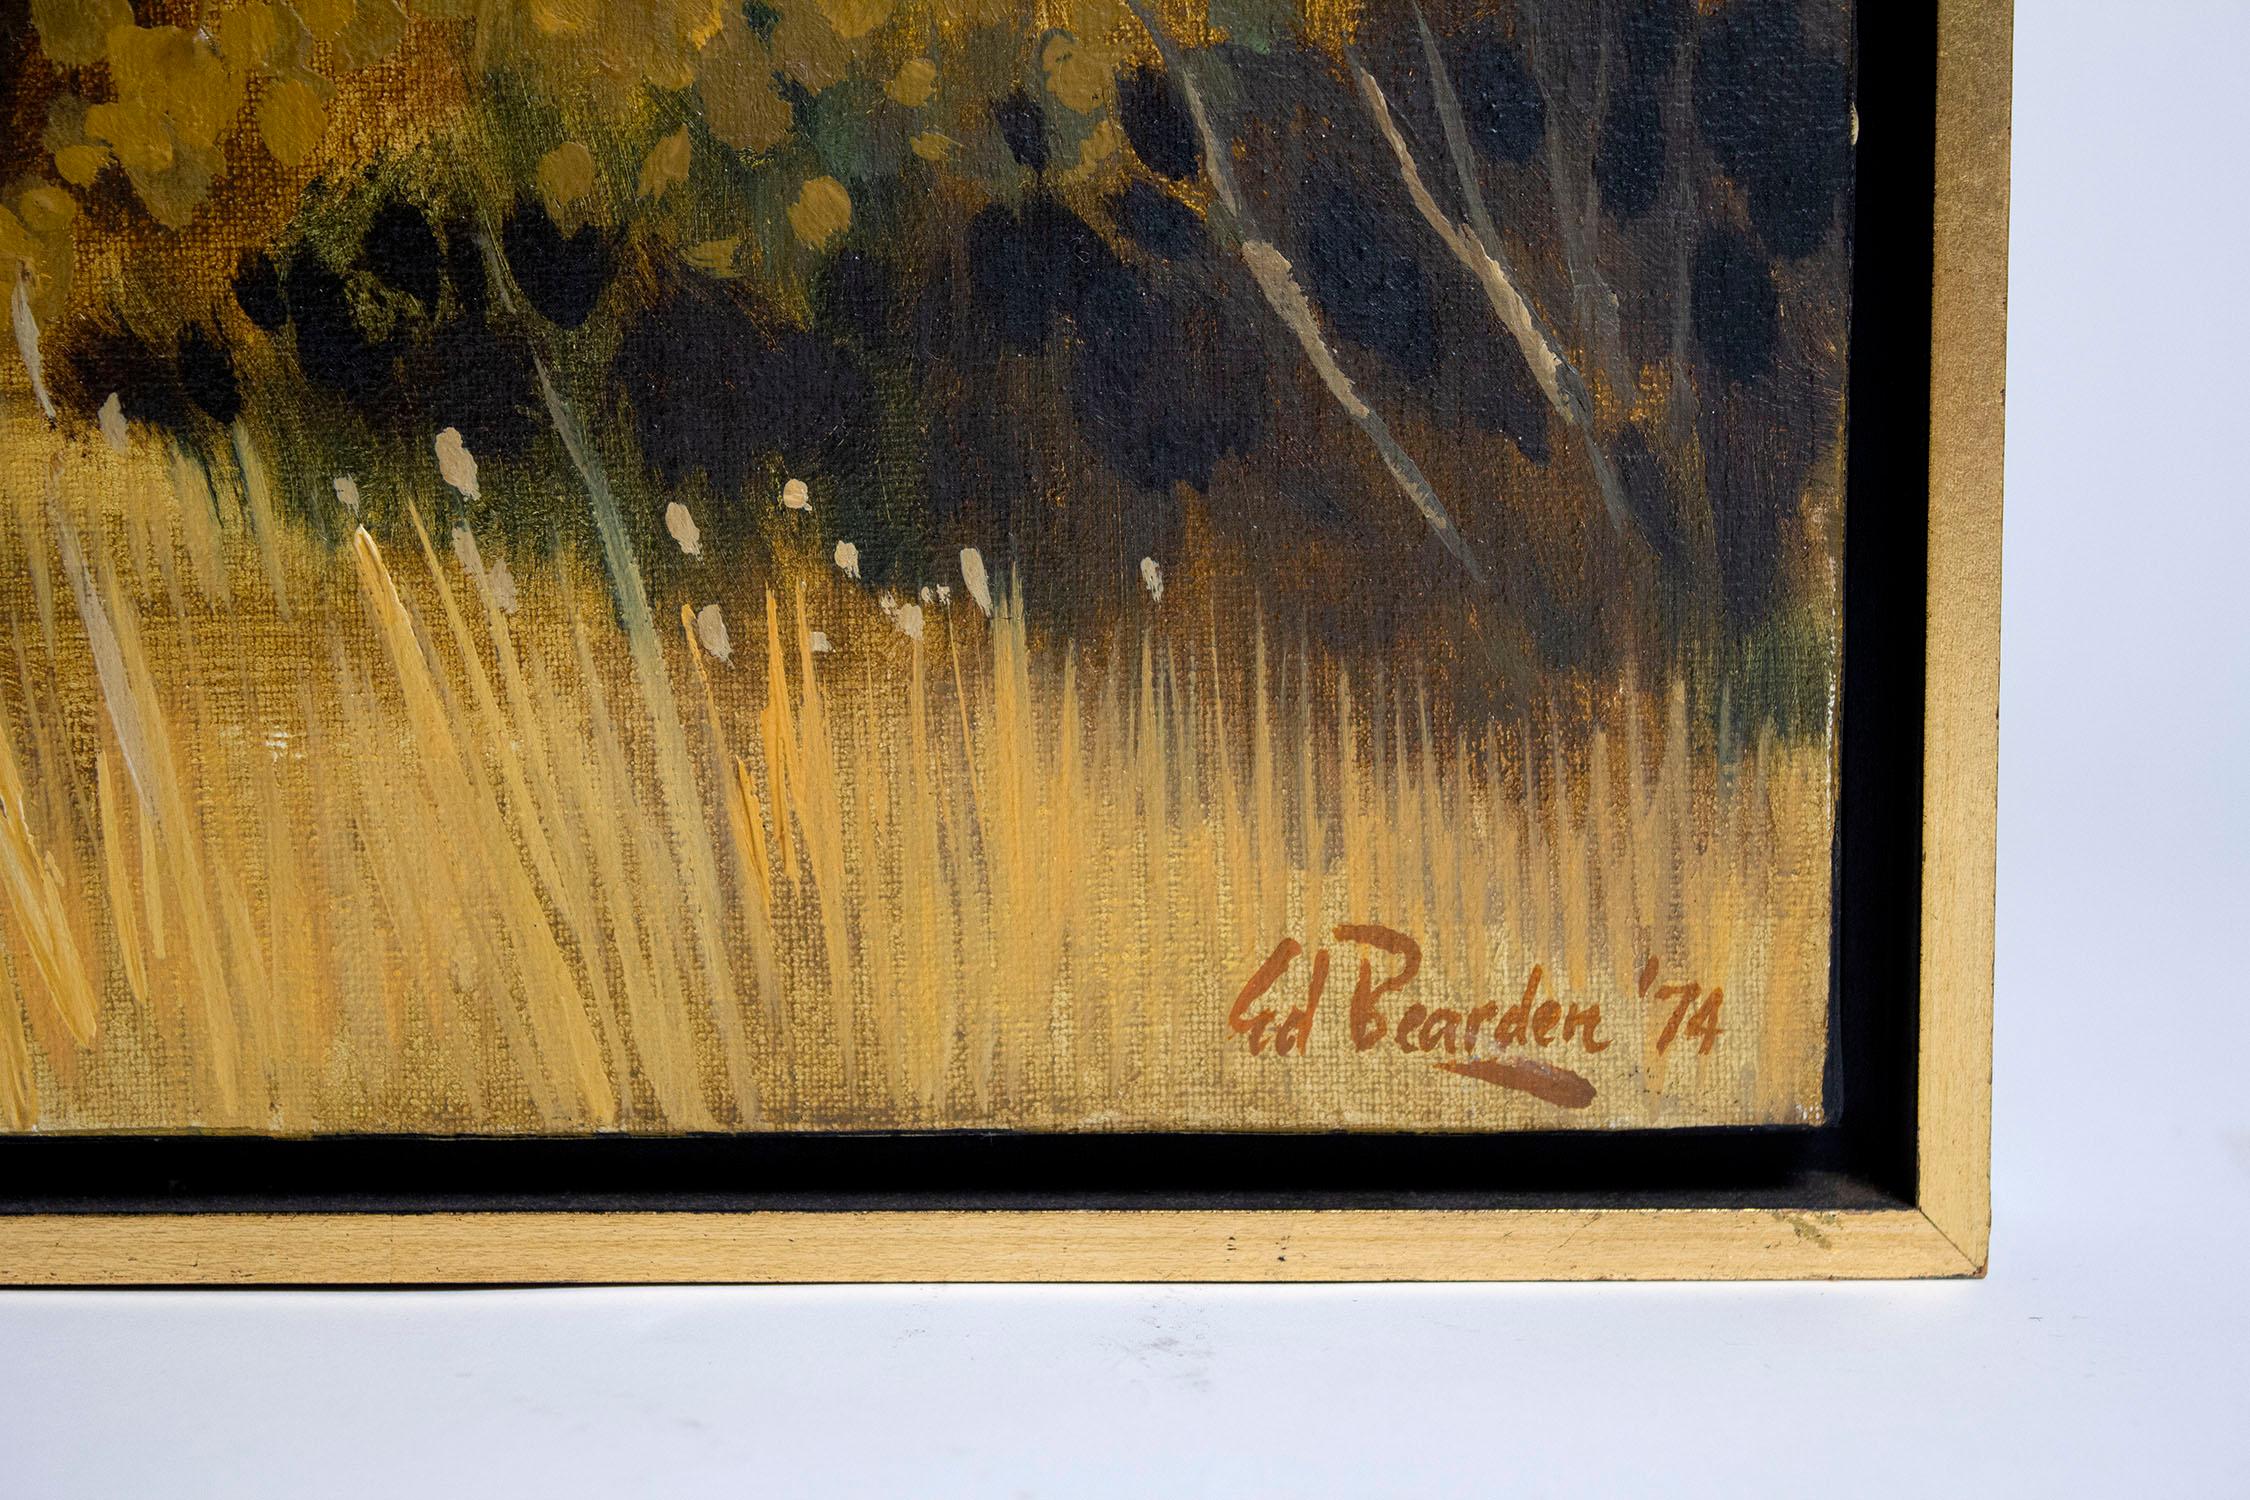 Mid-Century Modern Ed Bearden Oil on Canvas 'Edge of the Woods in Fall' 1974 Texas Artist For Sale